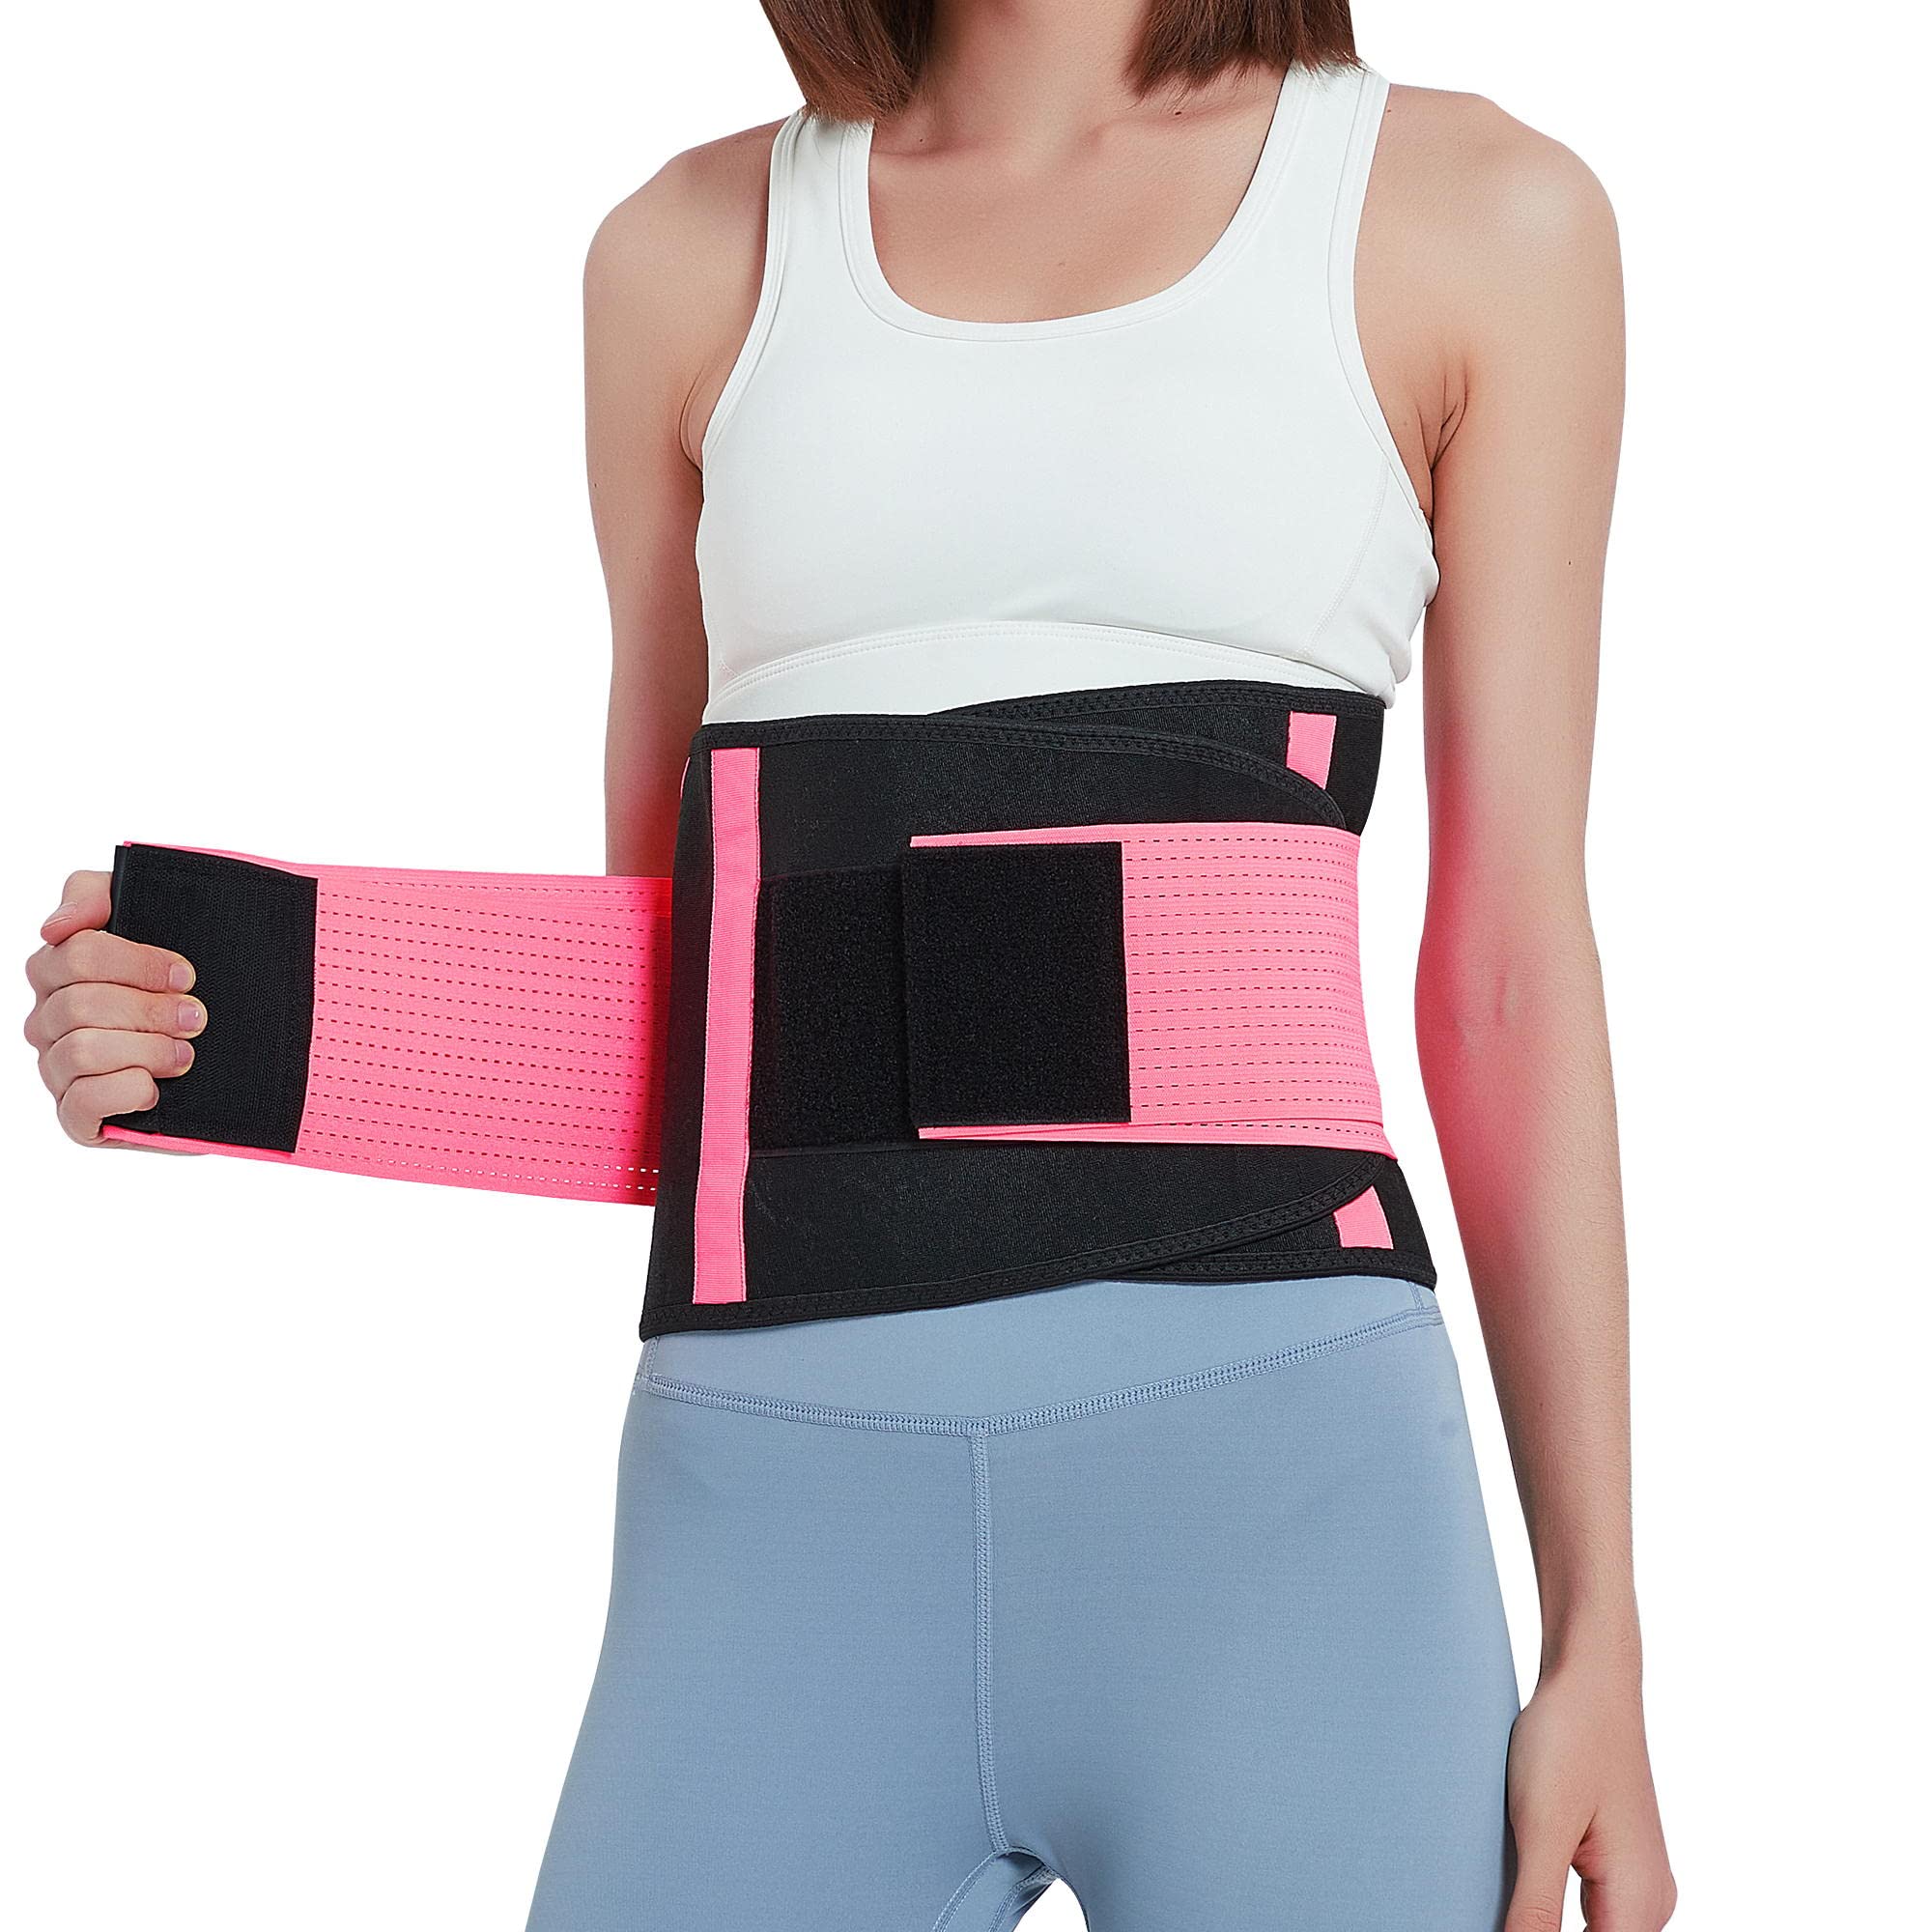 Qlwfov Back Support Belt for Women Lower Back Brace for Pain